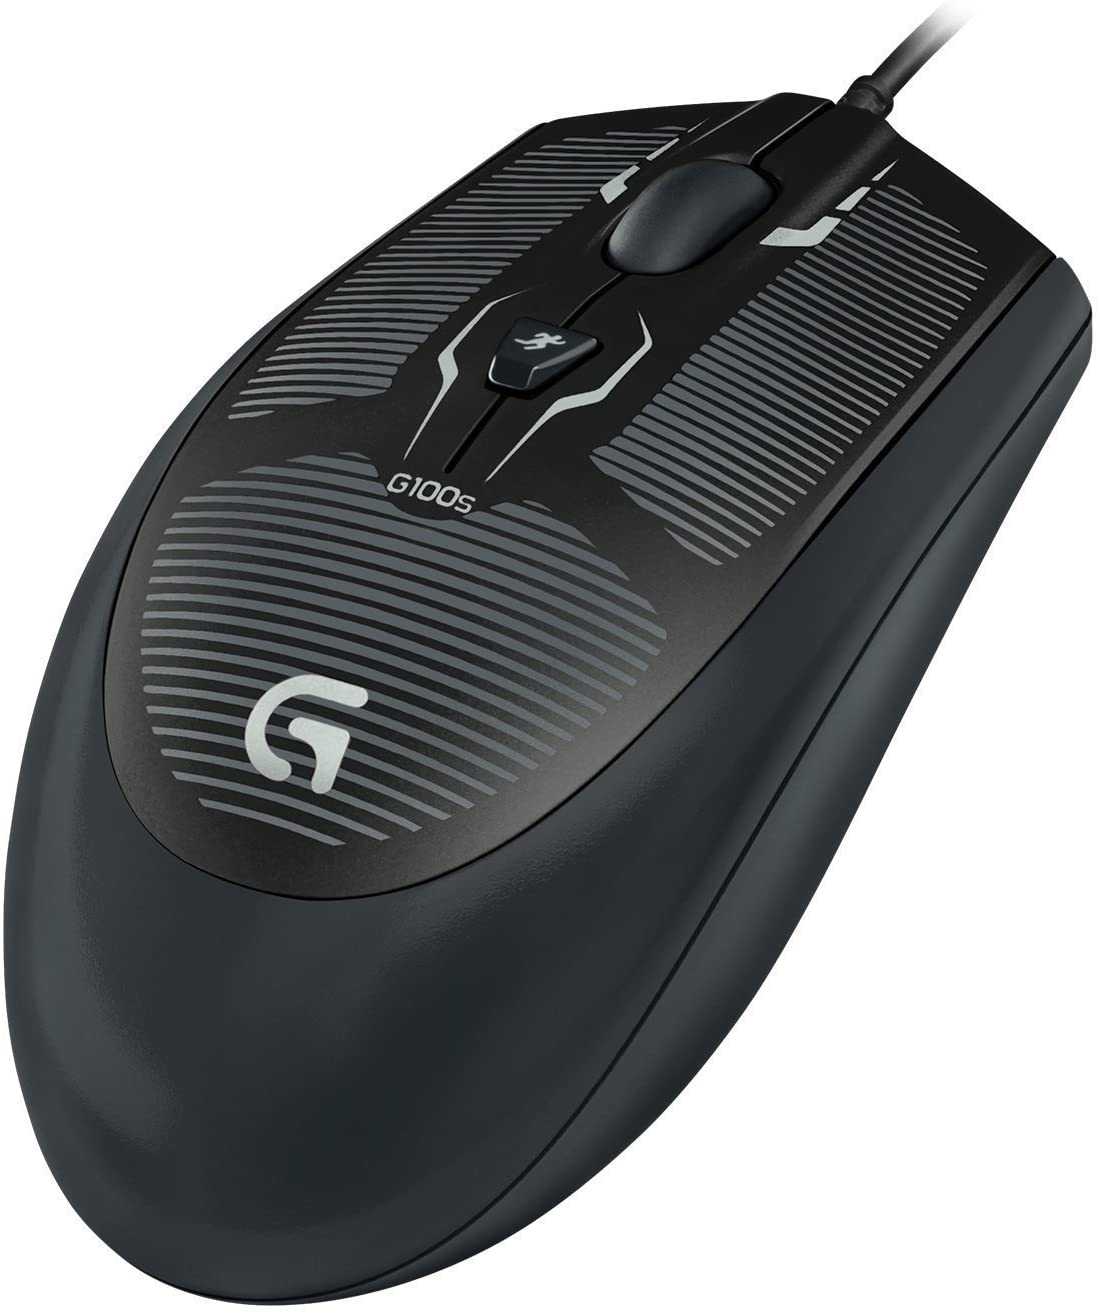 Logitech gaming mouse g100s black usb